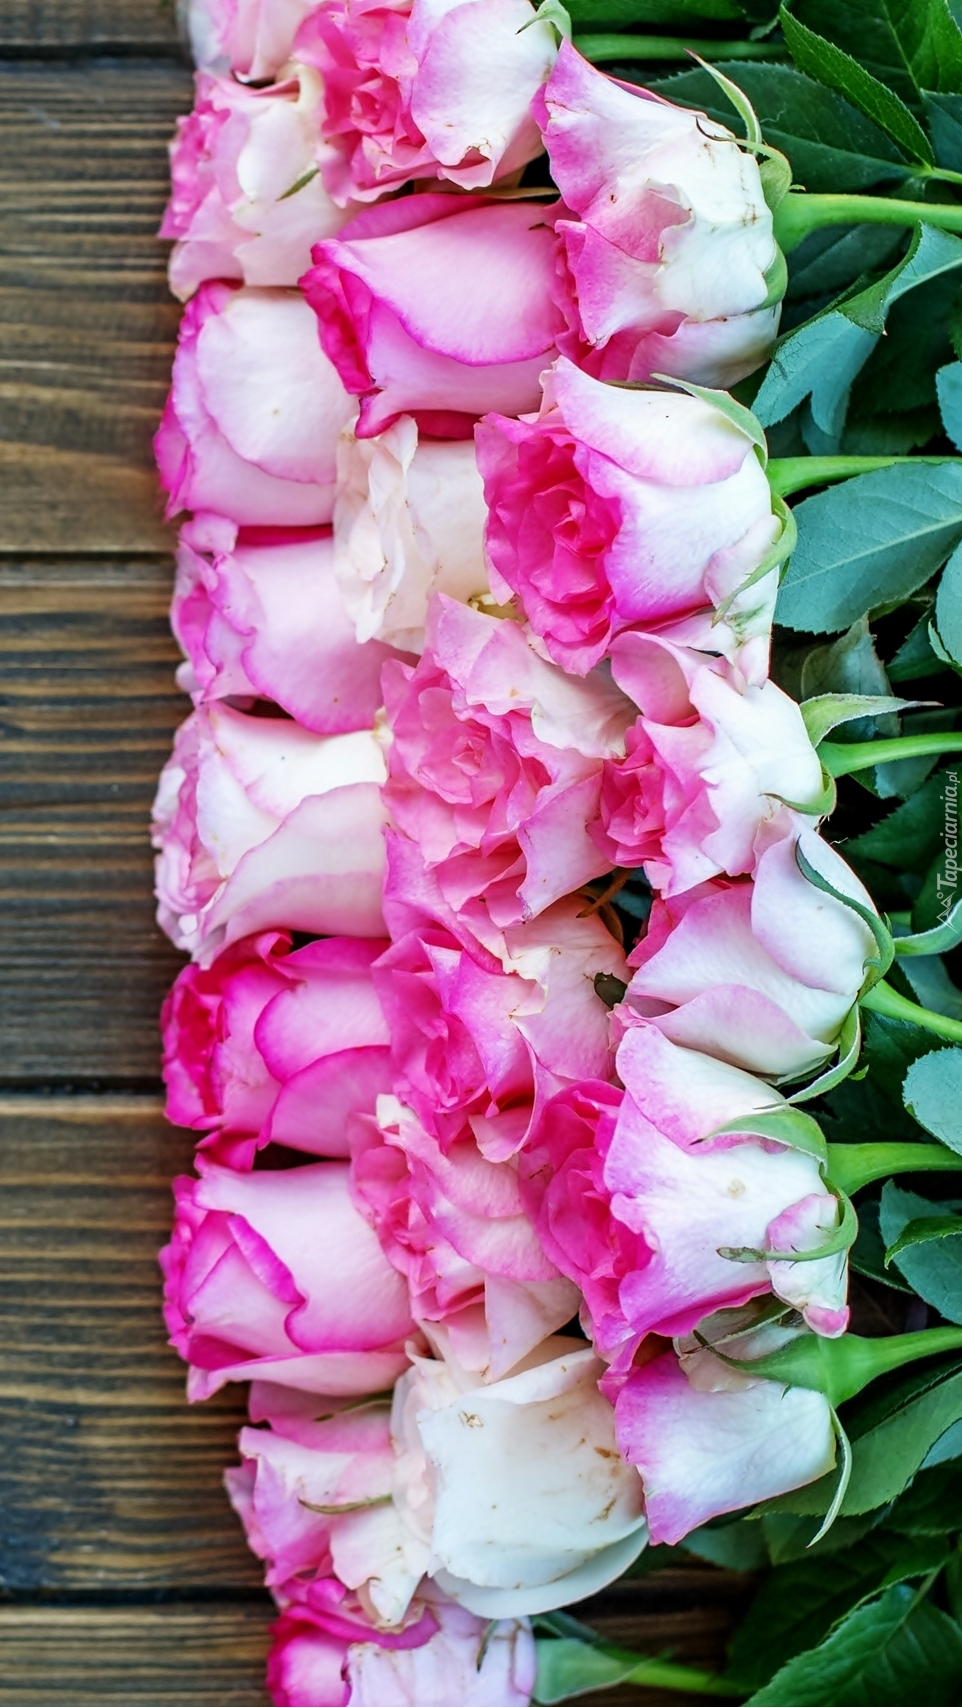 Biało-różowe róże na deskach